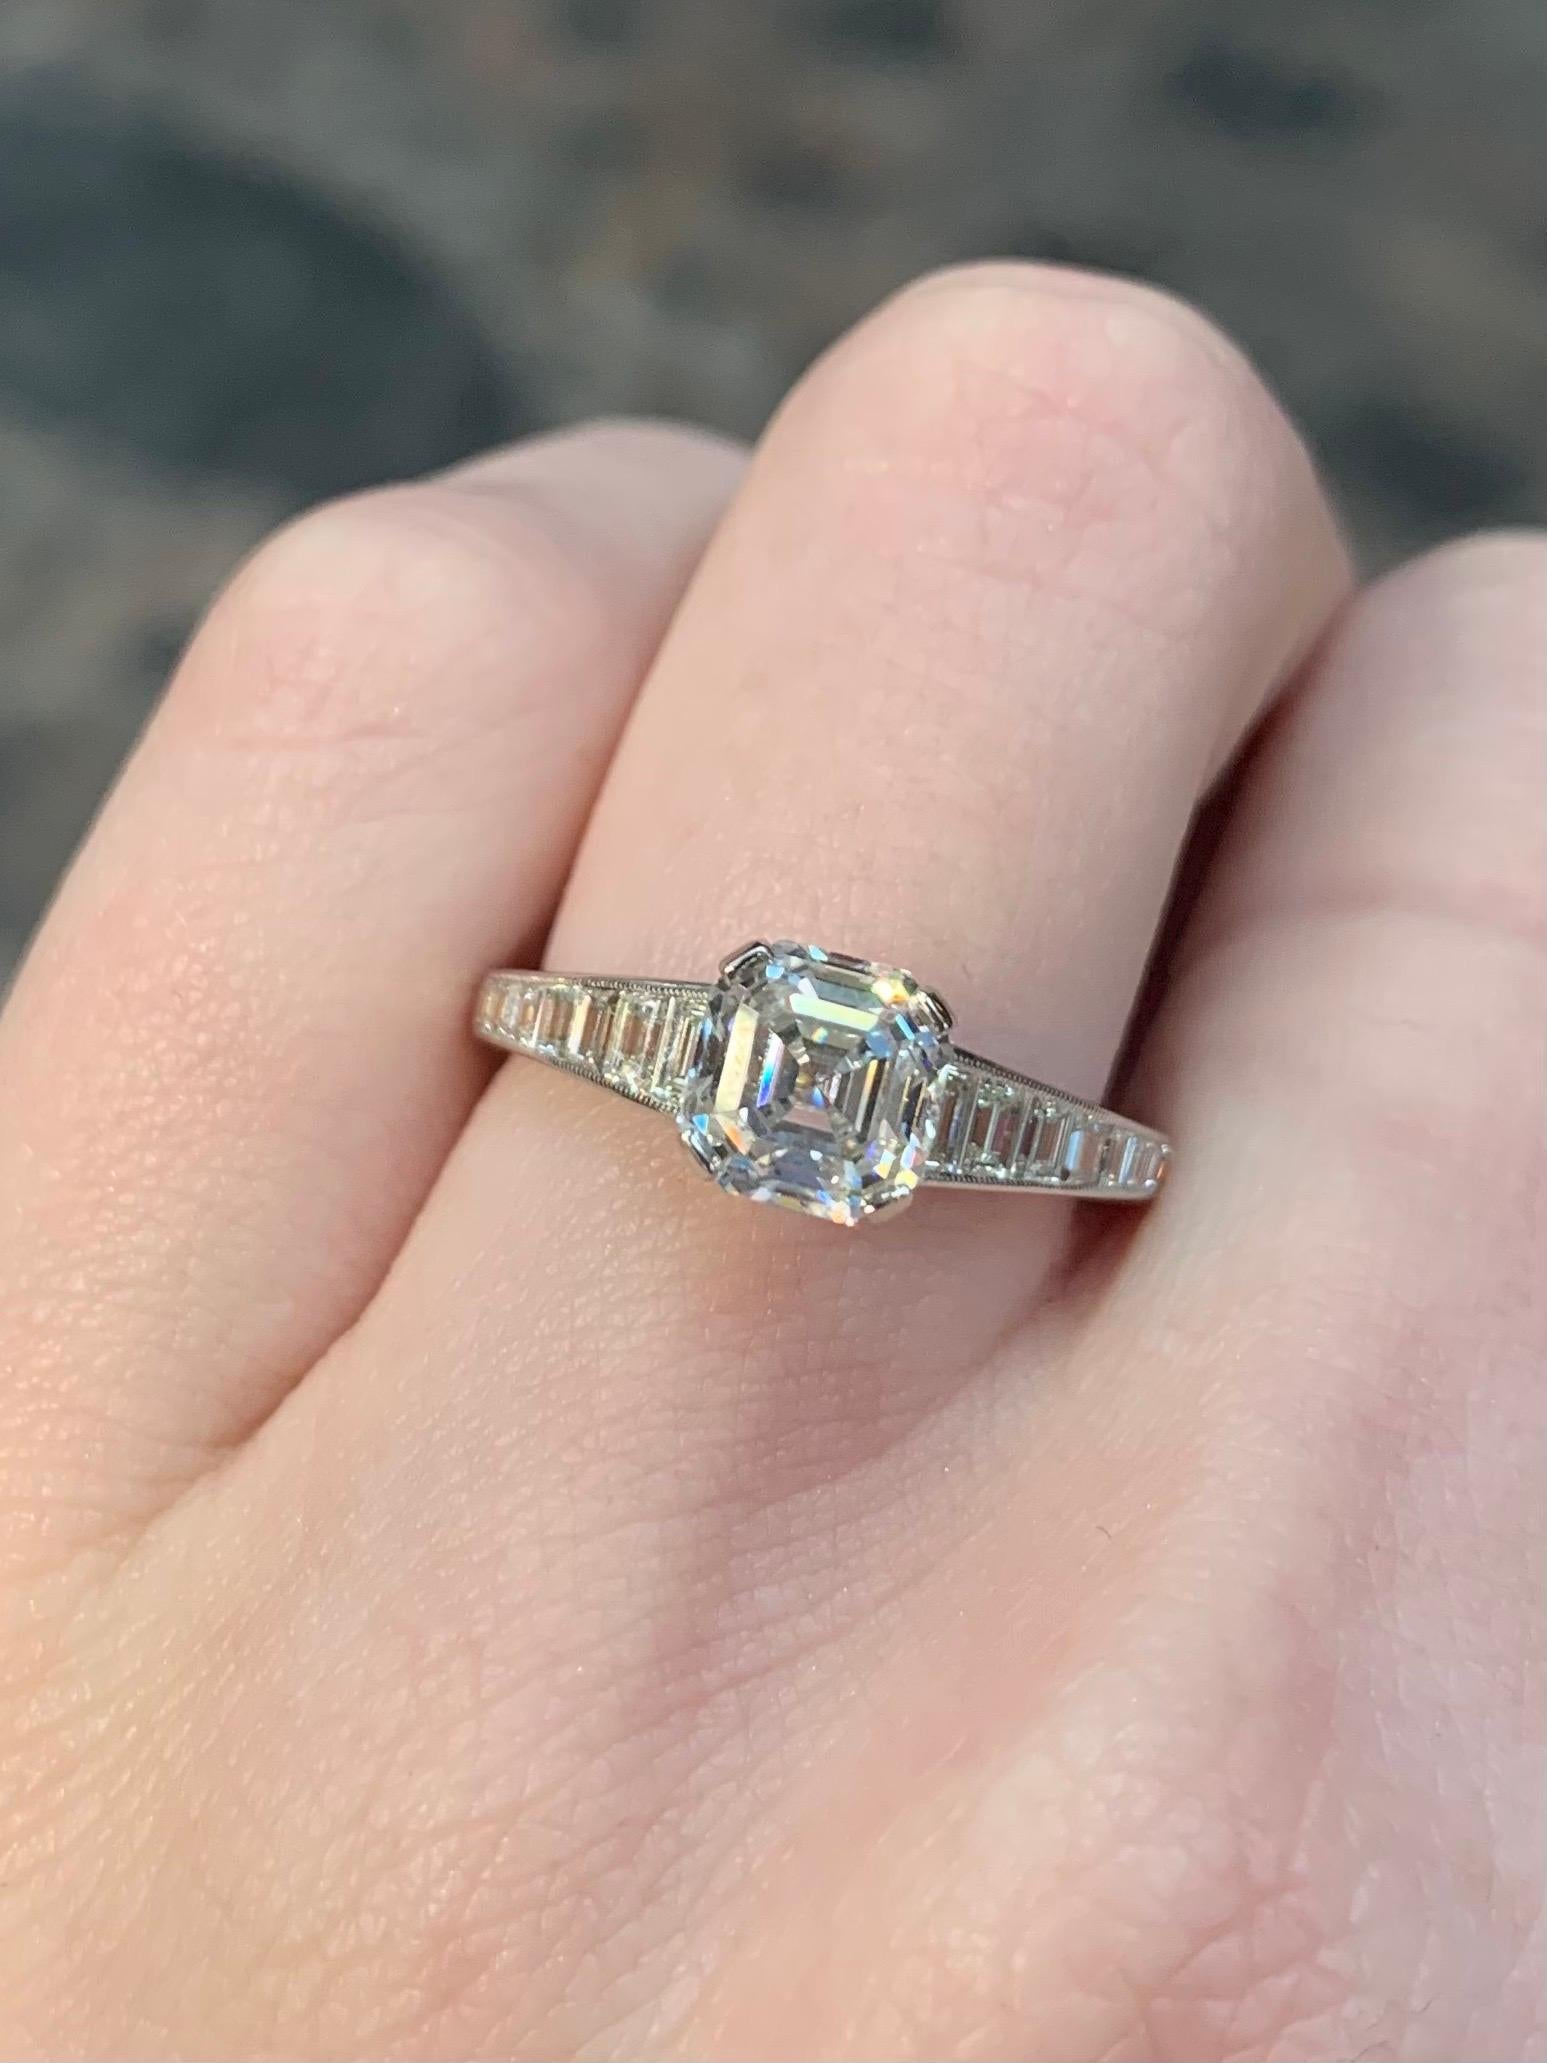 GIA Certified Art Deco Style Asscher Cut Diamond Engagement Ring in Platinum 4